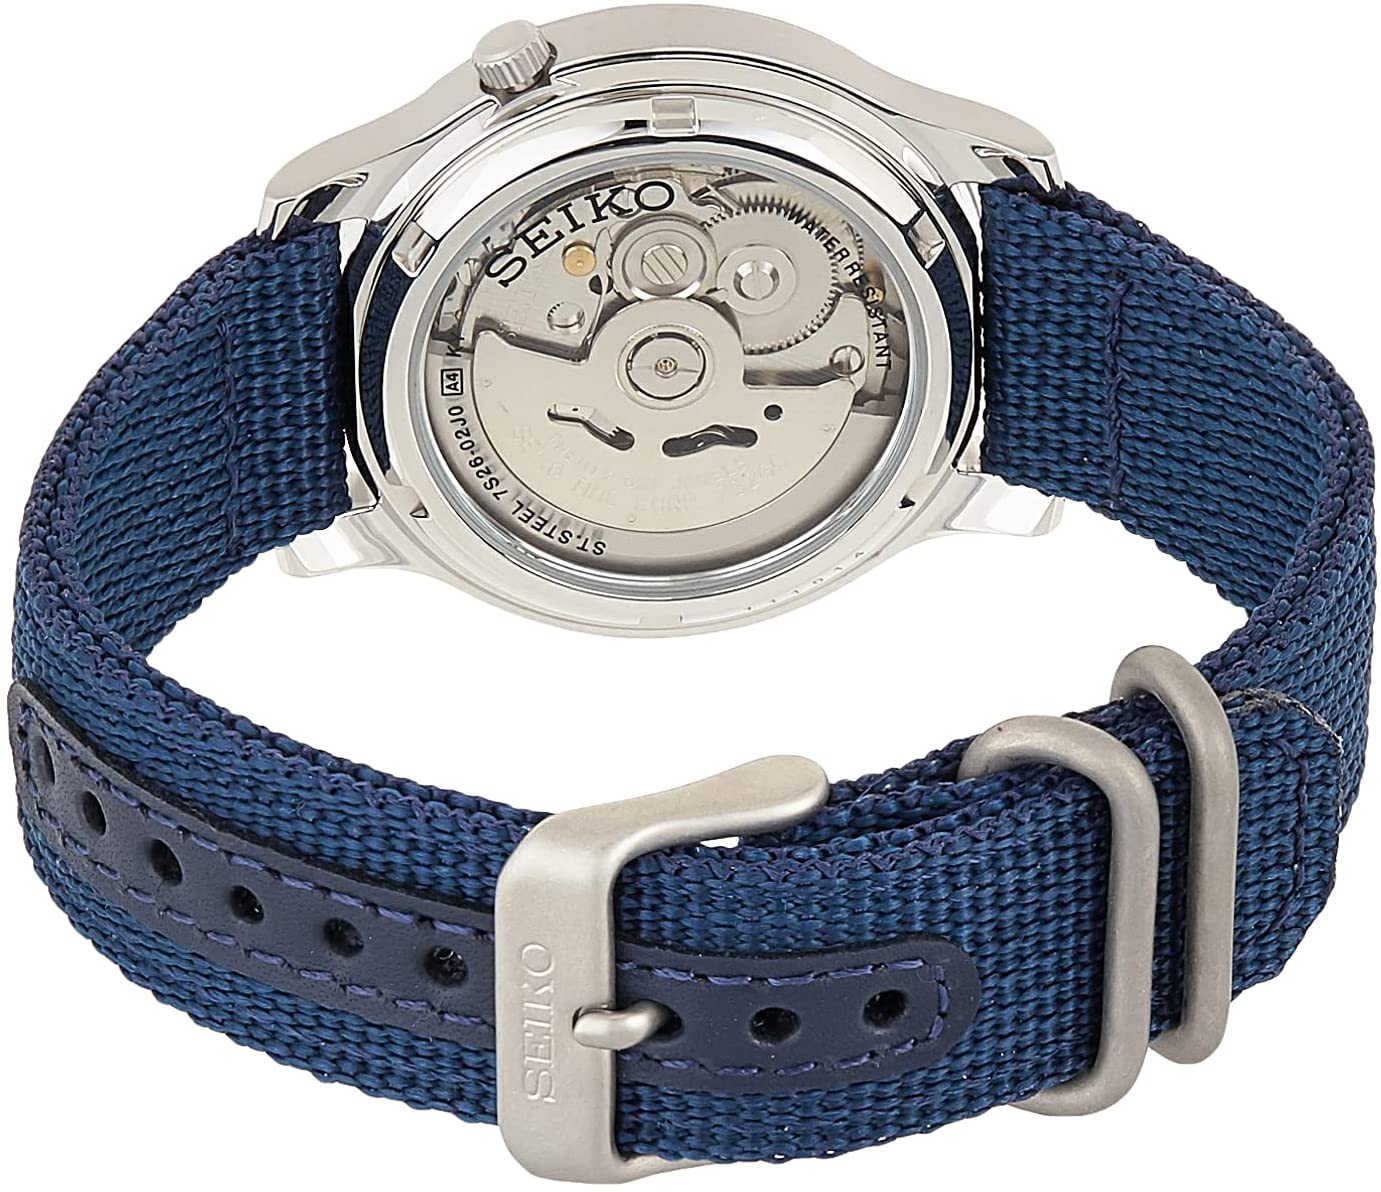 hoofdpijn afbreken opbouwen Seiko 5 Military Men's Blue Dial Nylon Band Automatic Watch – SNK807K2 -  Dirhami